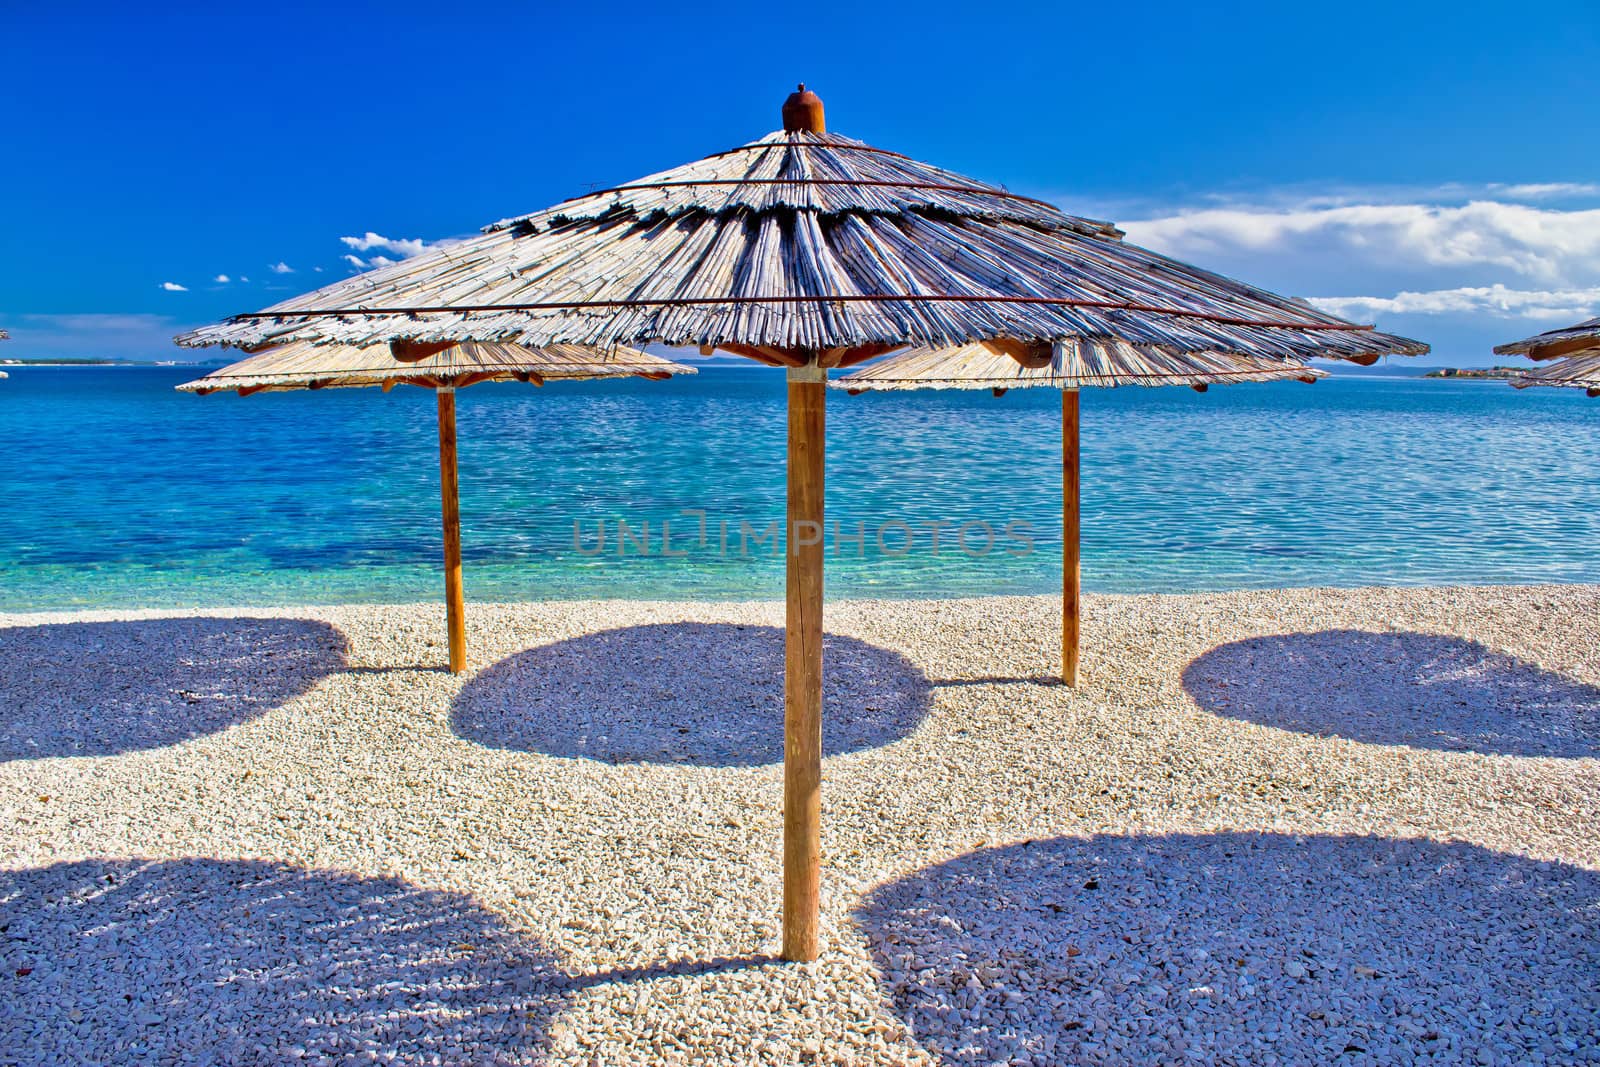 Pebble beach and turquoise sea umbrella by xbrchx